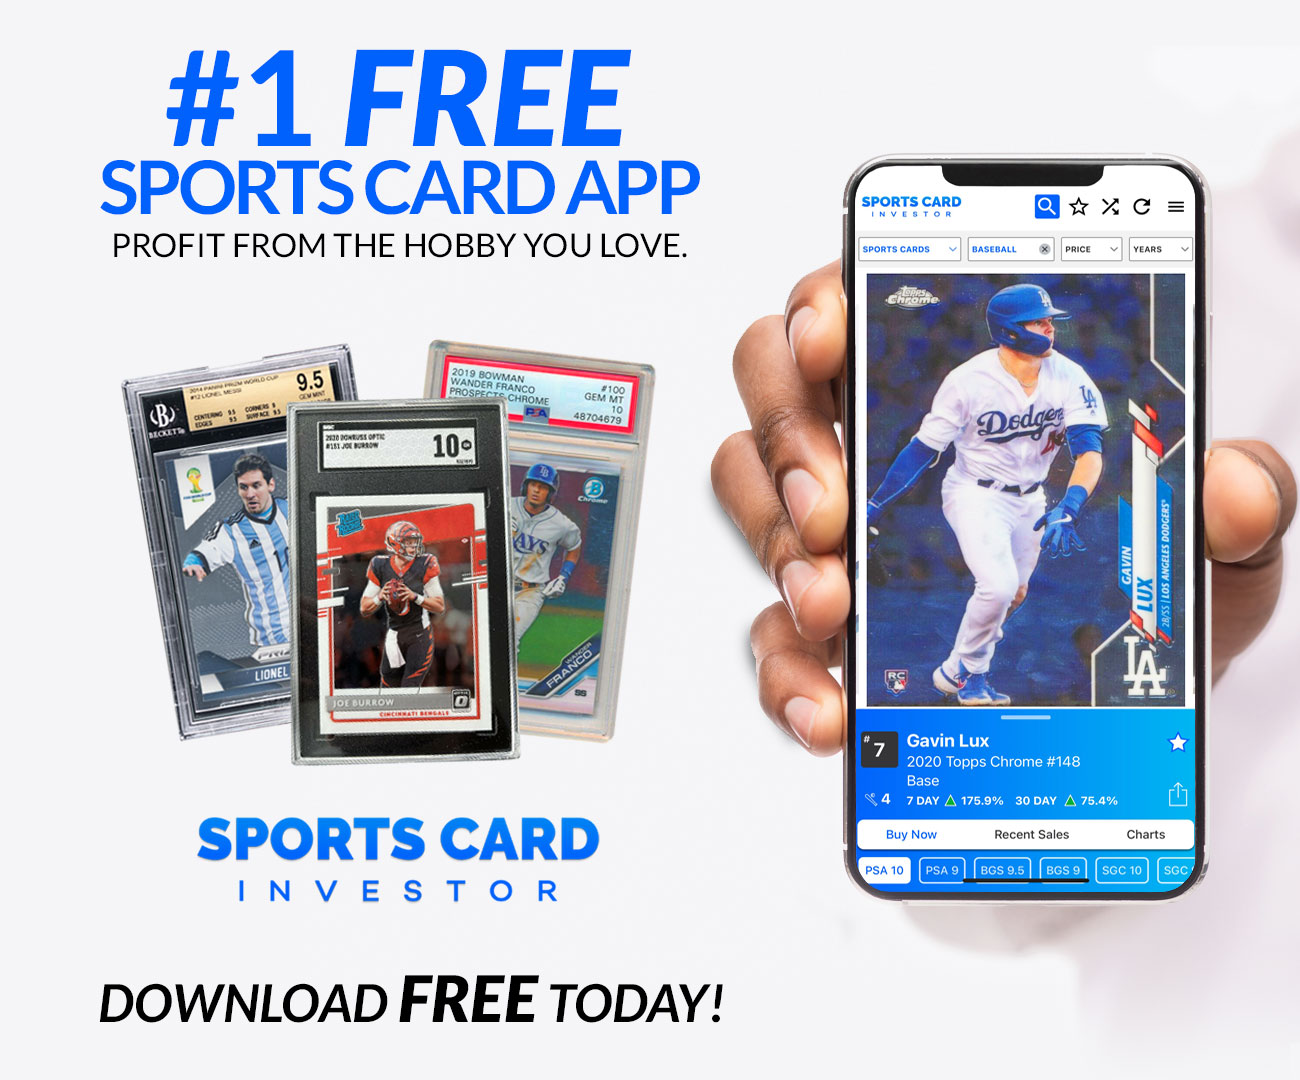 Sports Card Investor App - #1 Free Sports Card App